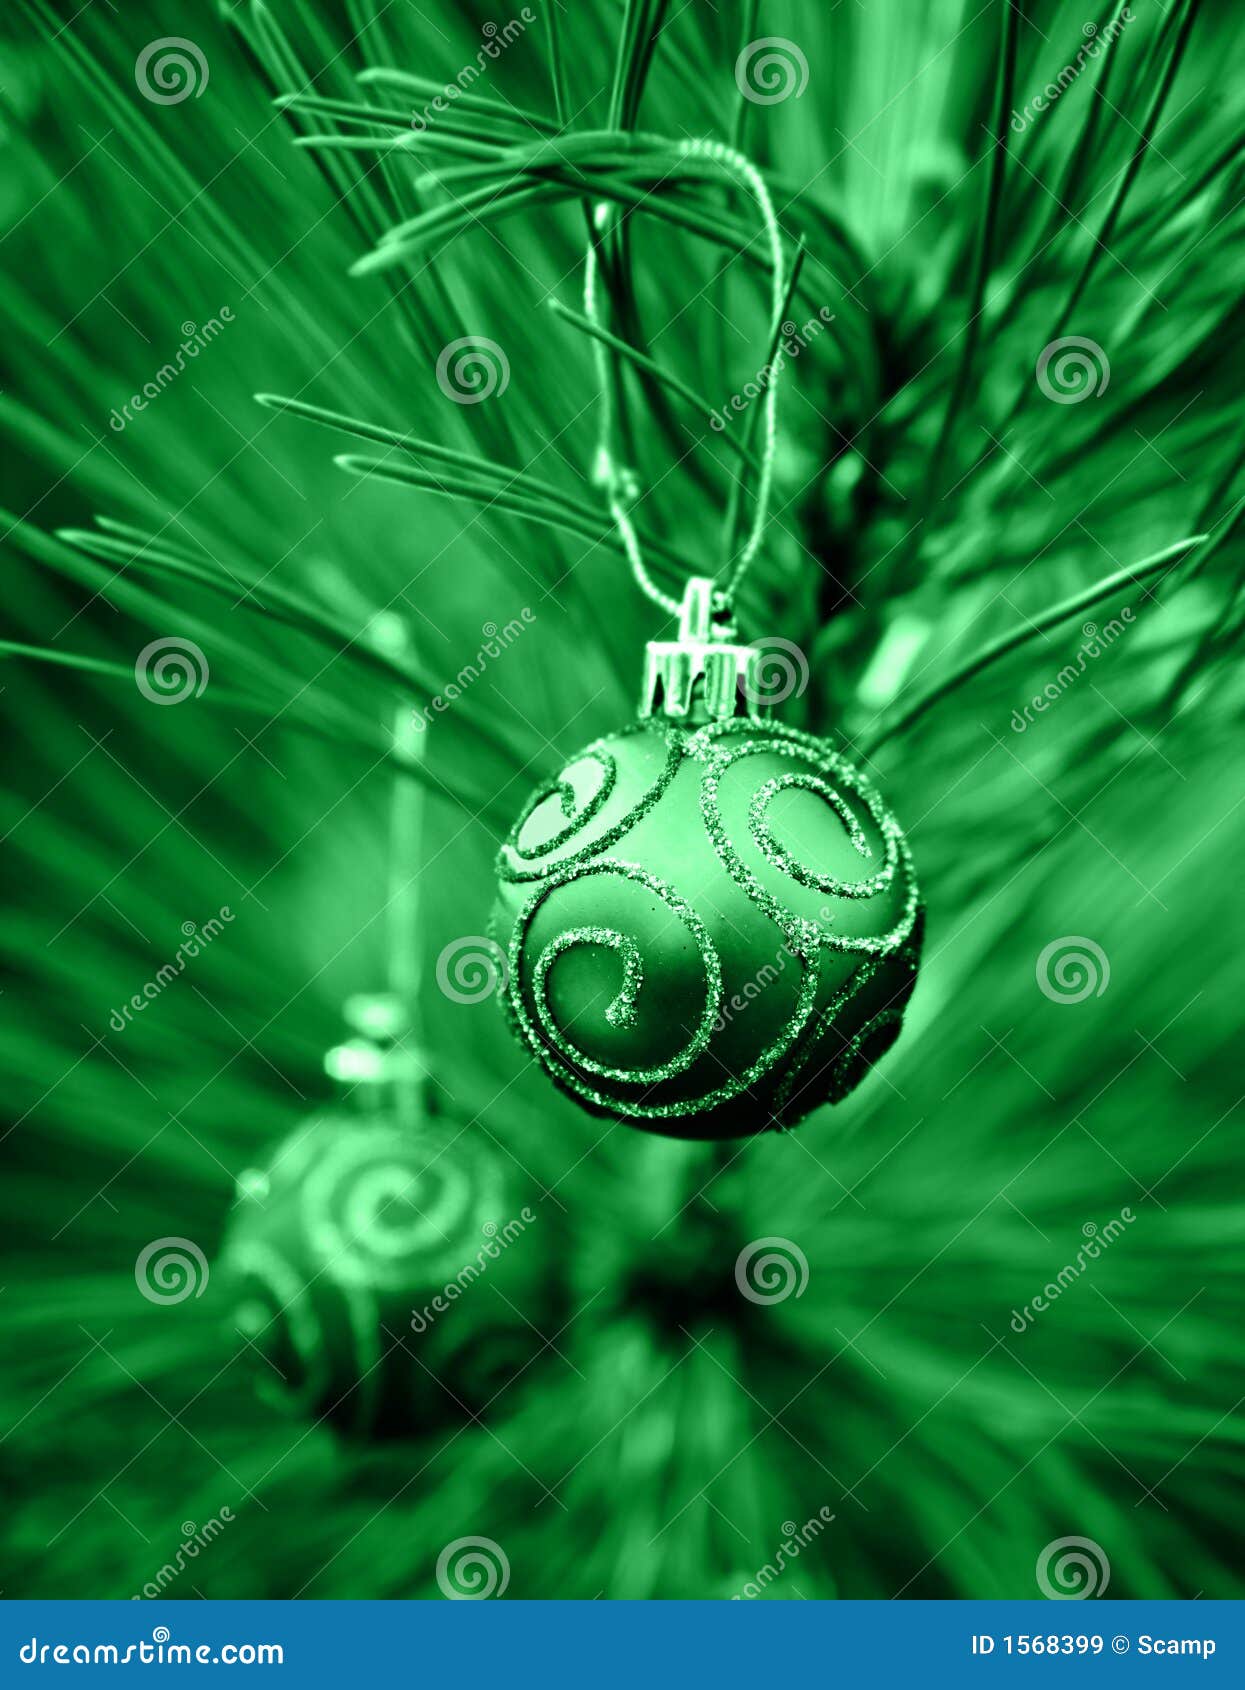 green-christmas-bulbs-1568399.jpg